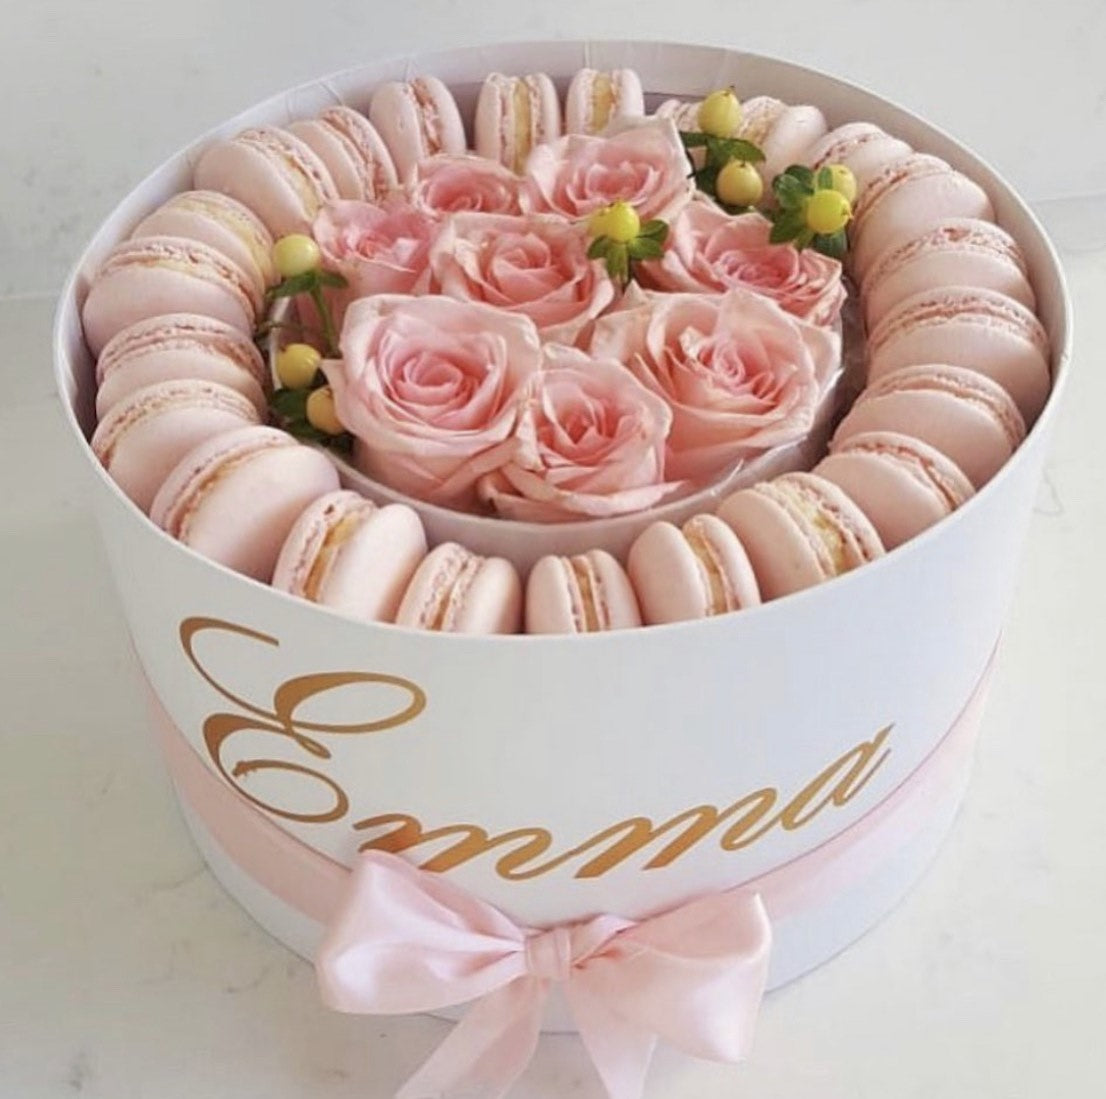 Dessert & Floral Gift Box